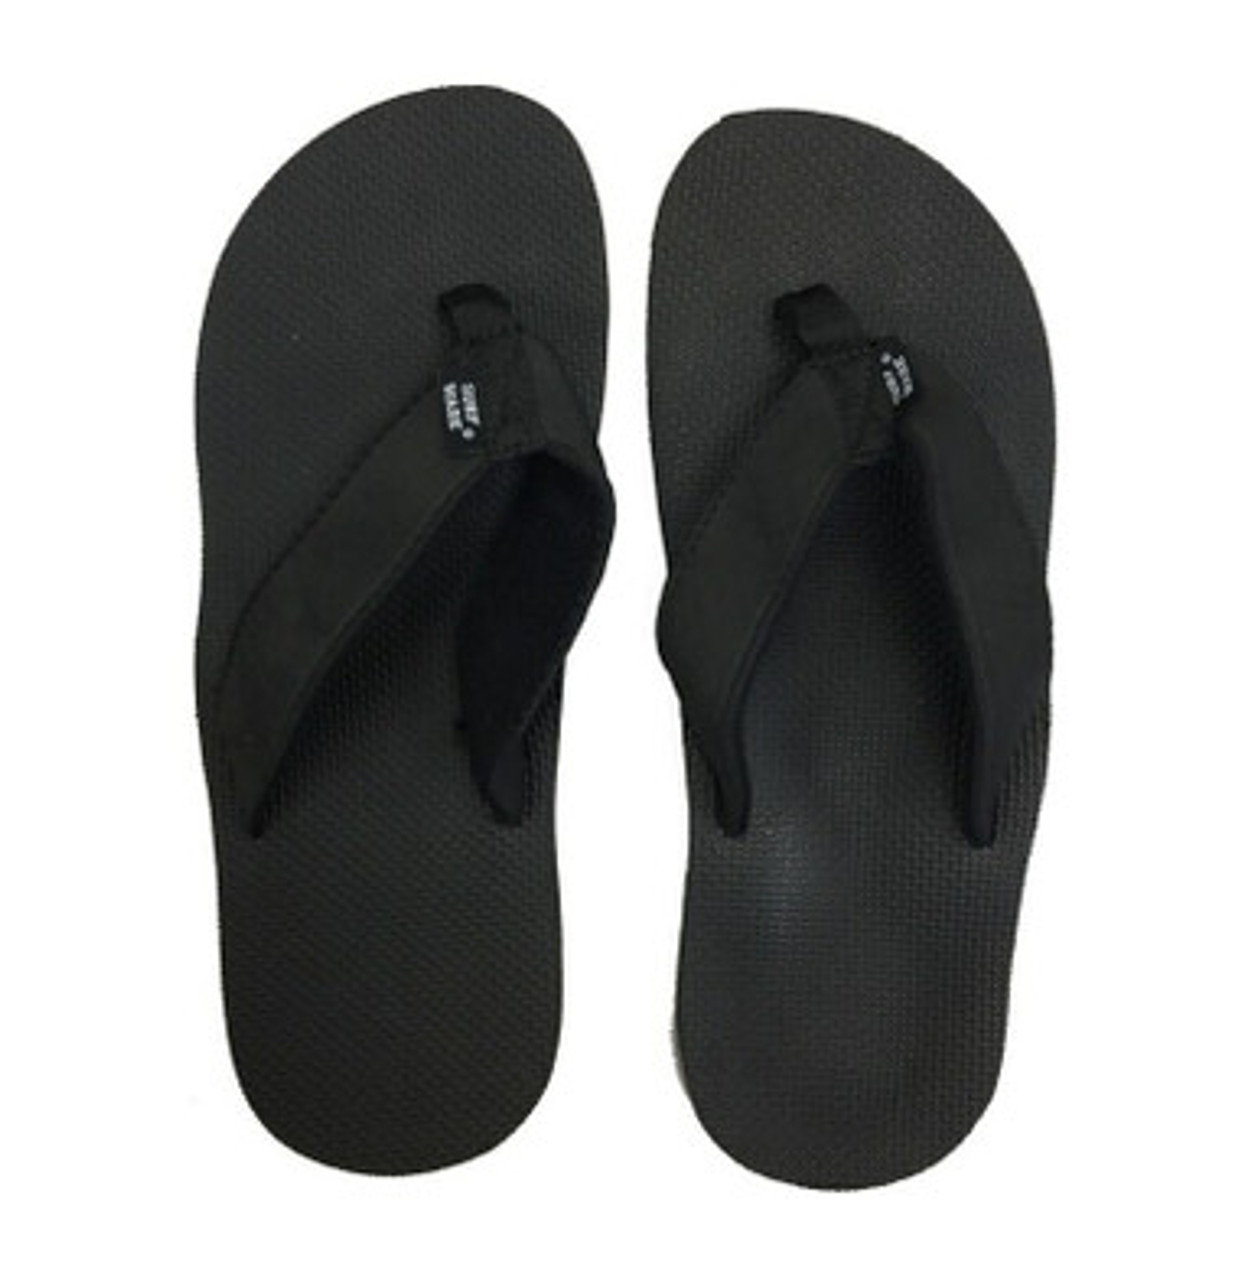 Men's Surfware Reef Sandal: Solid Black